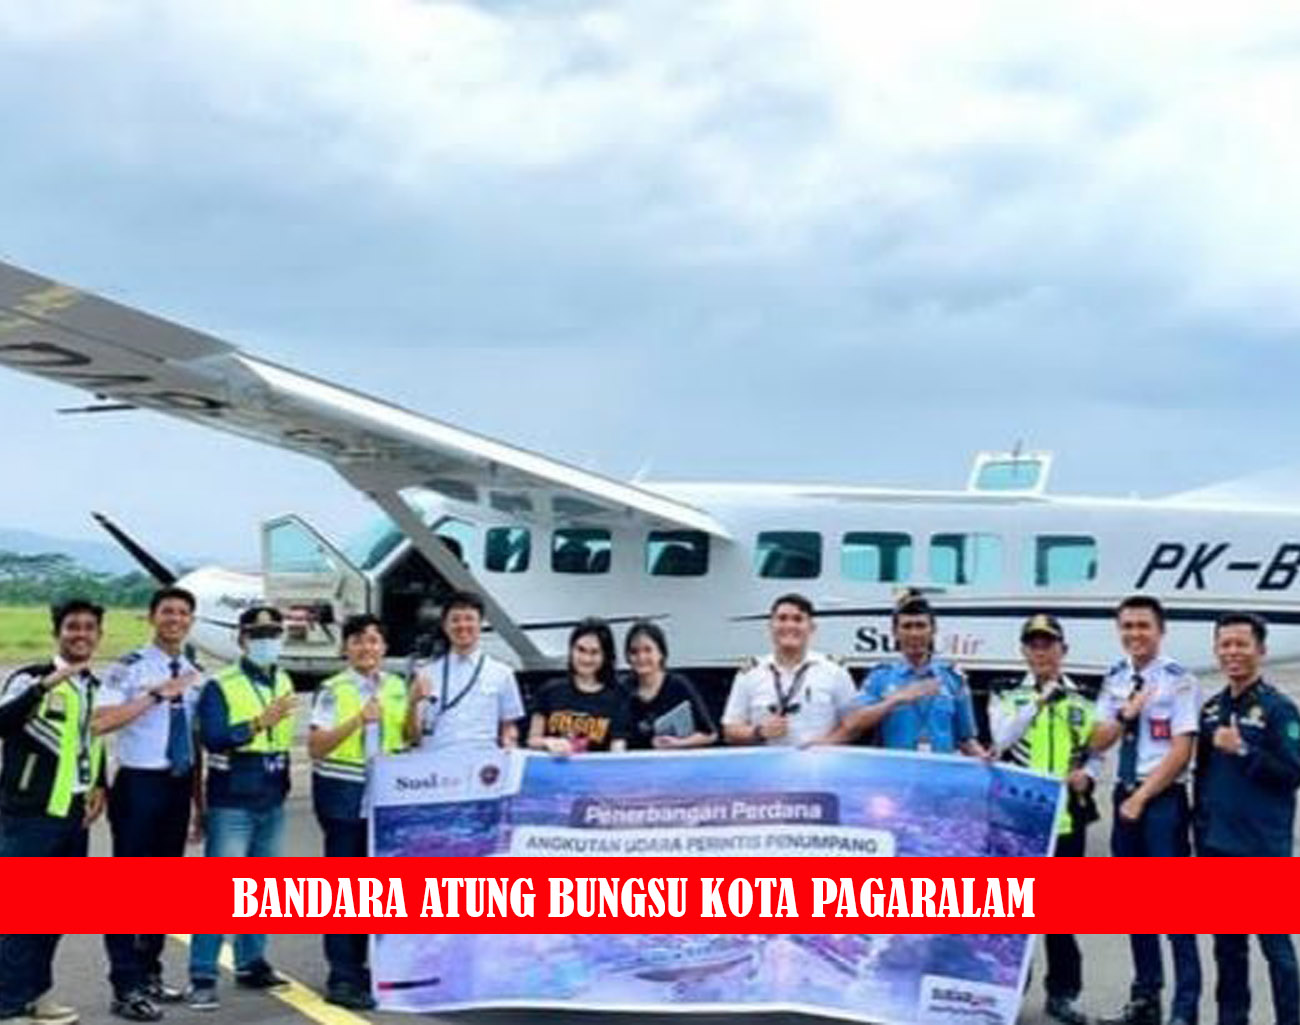 Inilah Harga Tiket dan Rute Penerbangan Bandara Atung Bungsu Kota Pagaralam, Rute Pagaralam-Palembang-Bengkulu